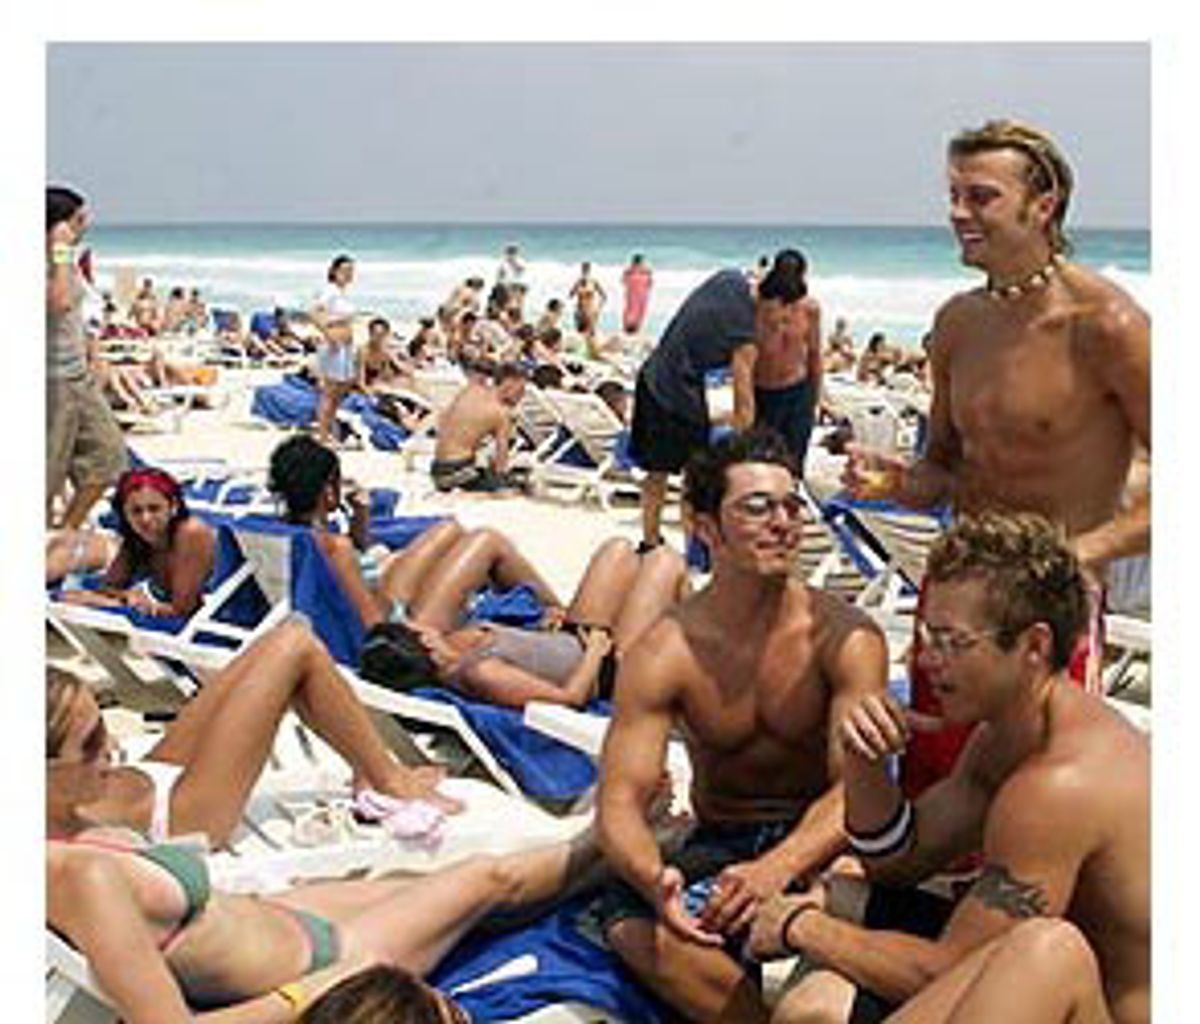 denise dearborn share free naked on the beach porn videos photos